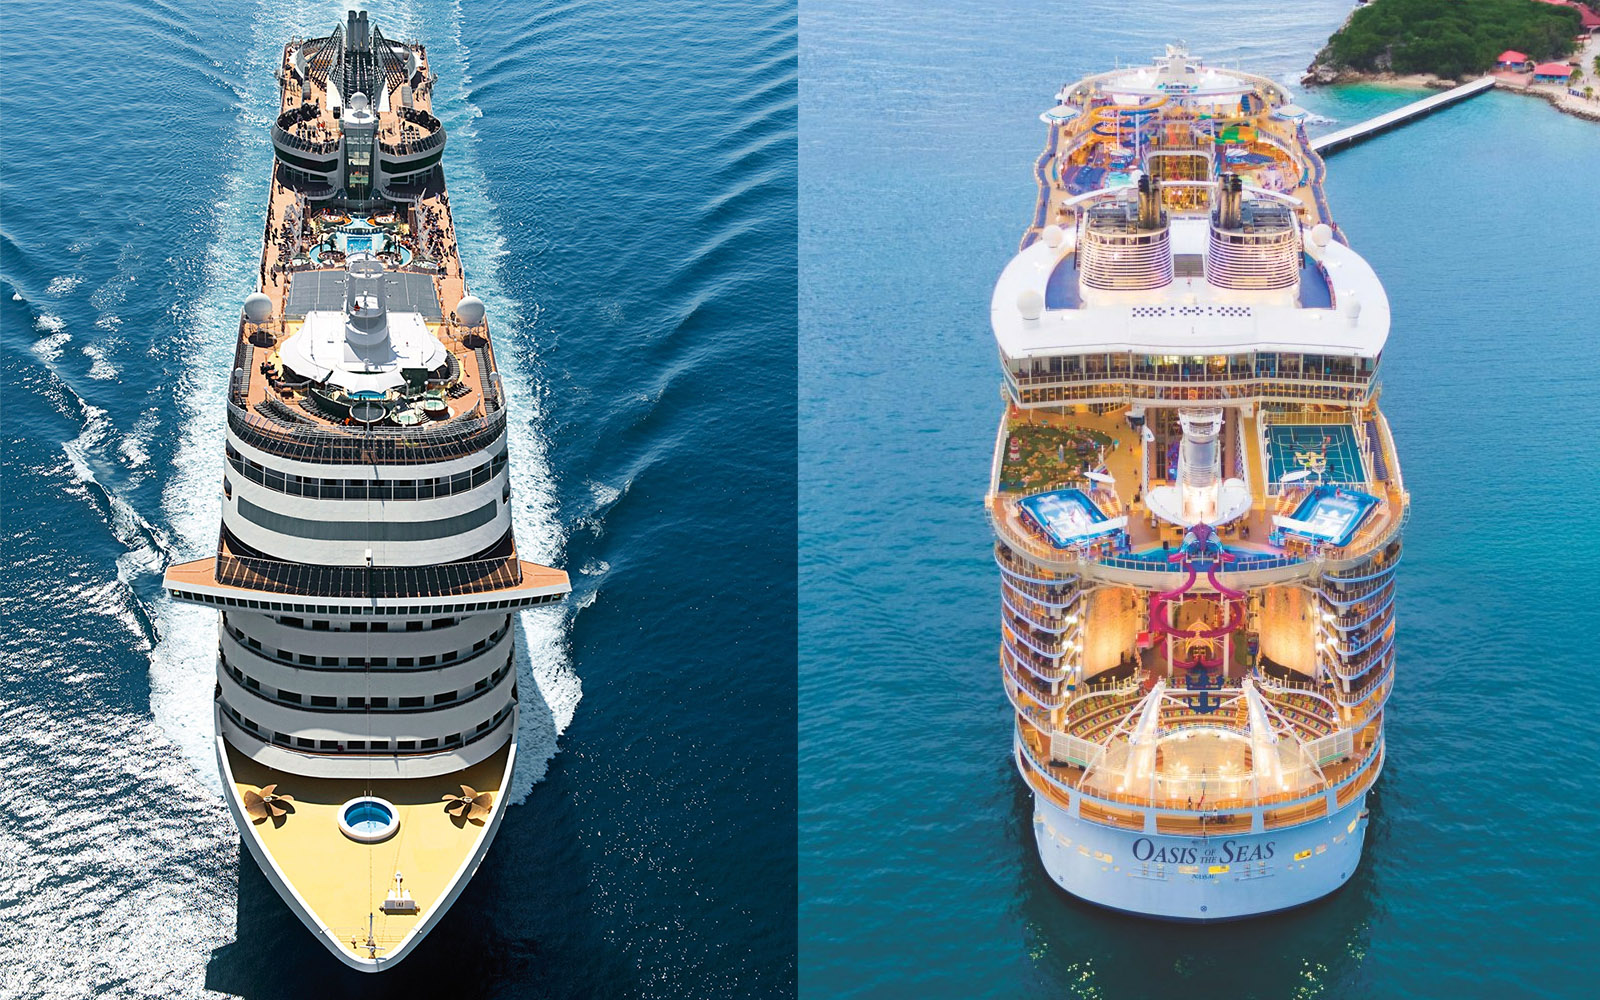 msc cruise ships vs royal caribbean